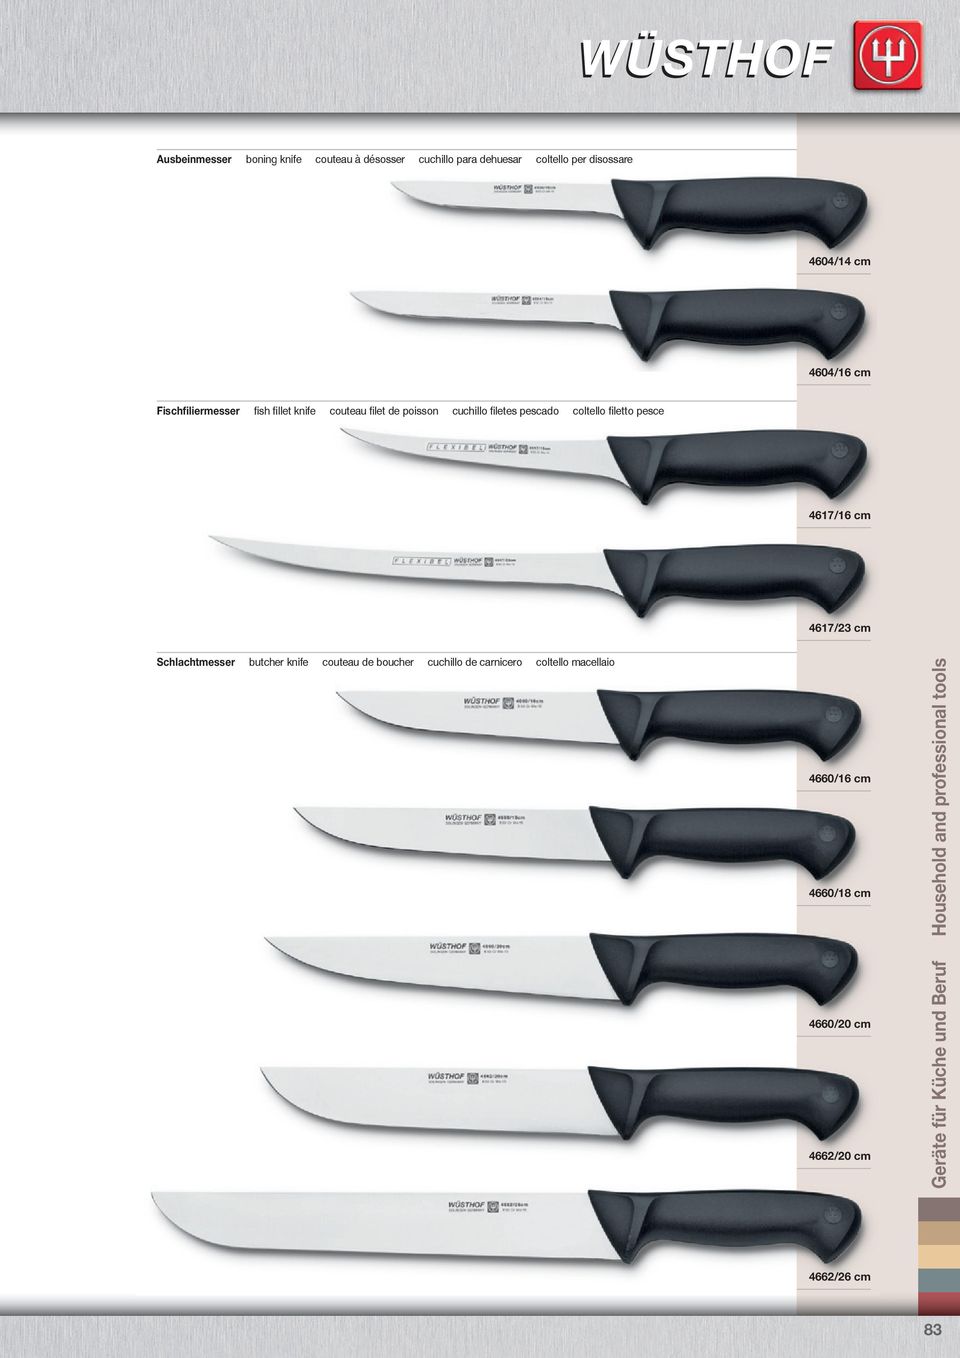 4617/16 cm 4617/23 cm Schlachtmesser butcher knife couteau de boucher cuchillo de carnicero coltello macellaio